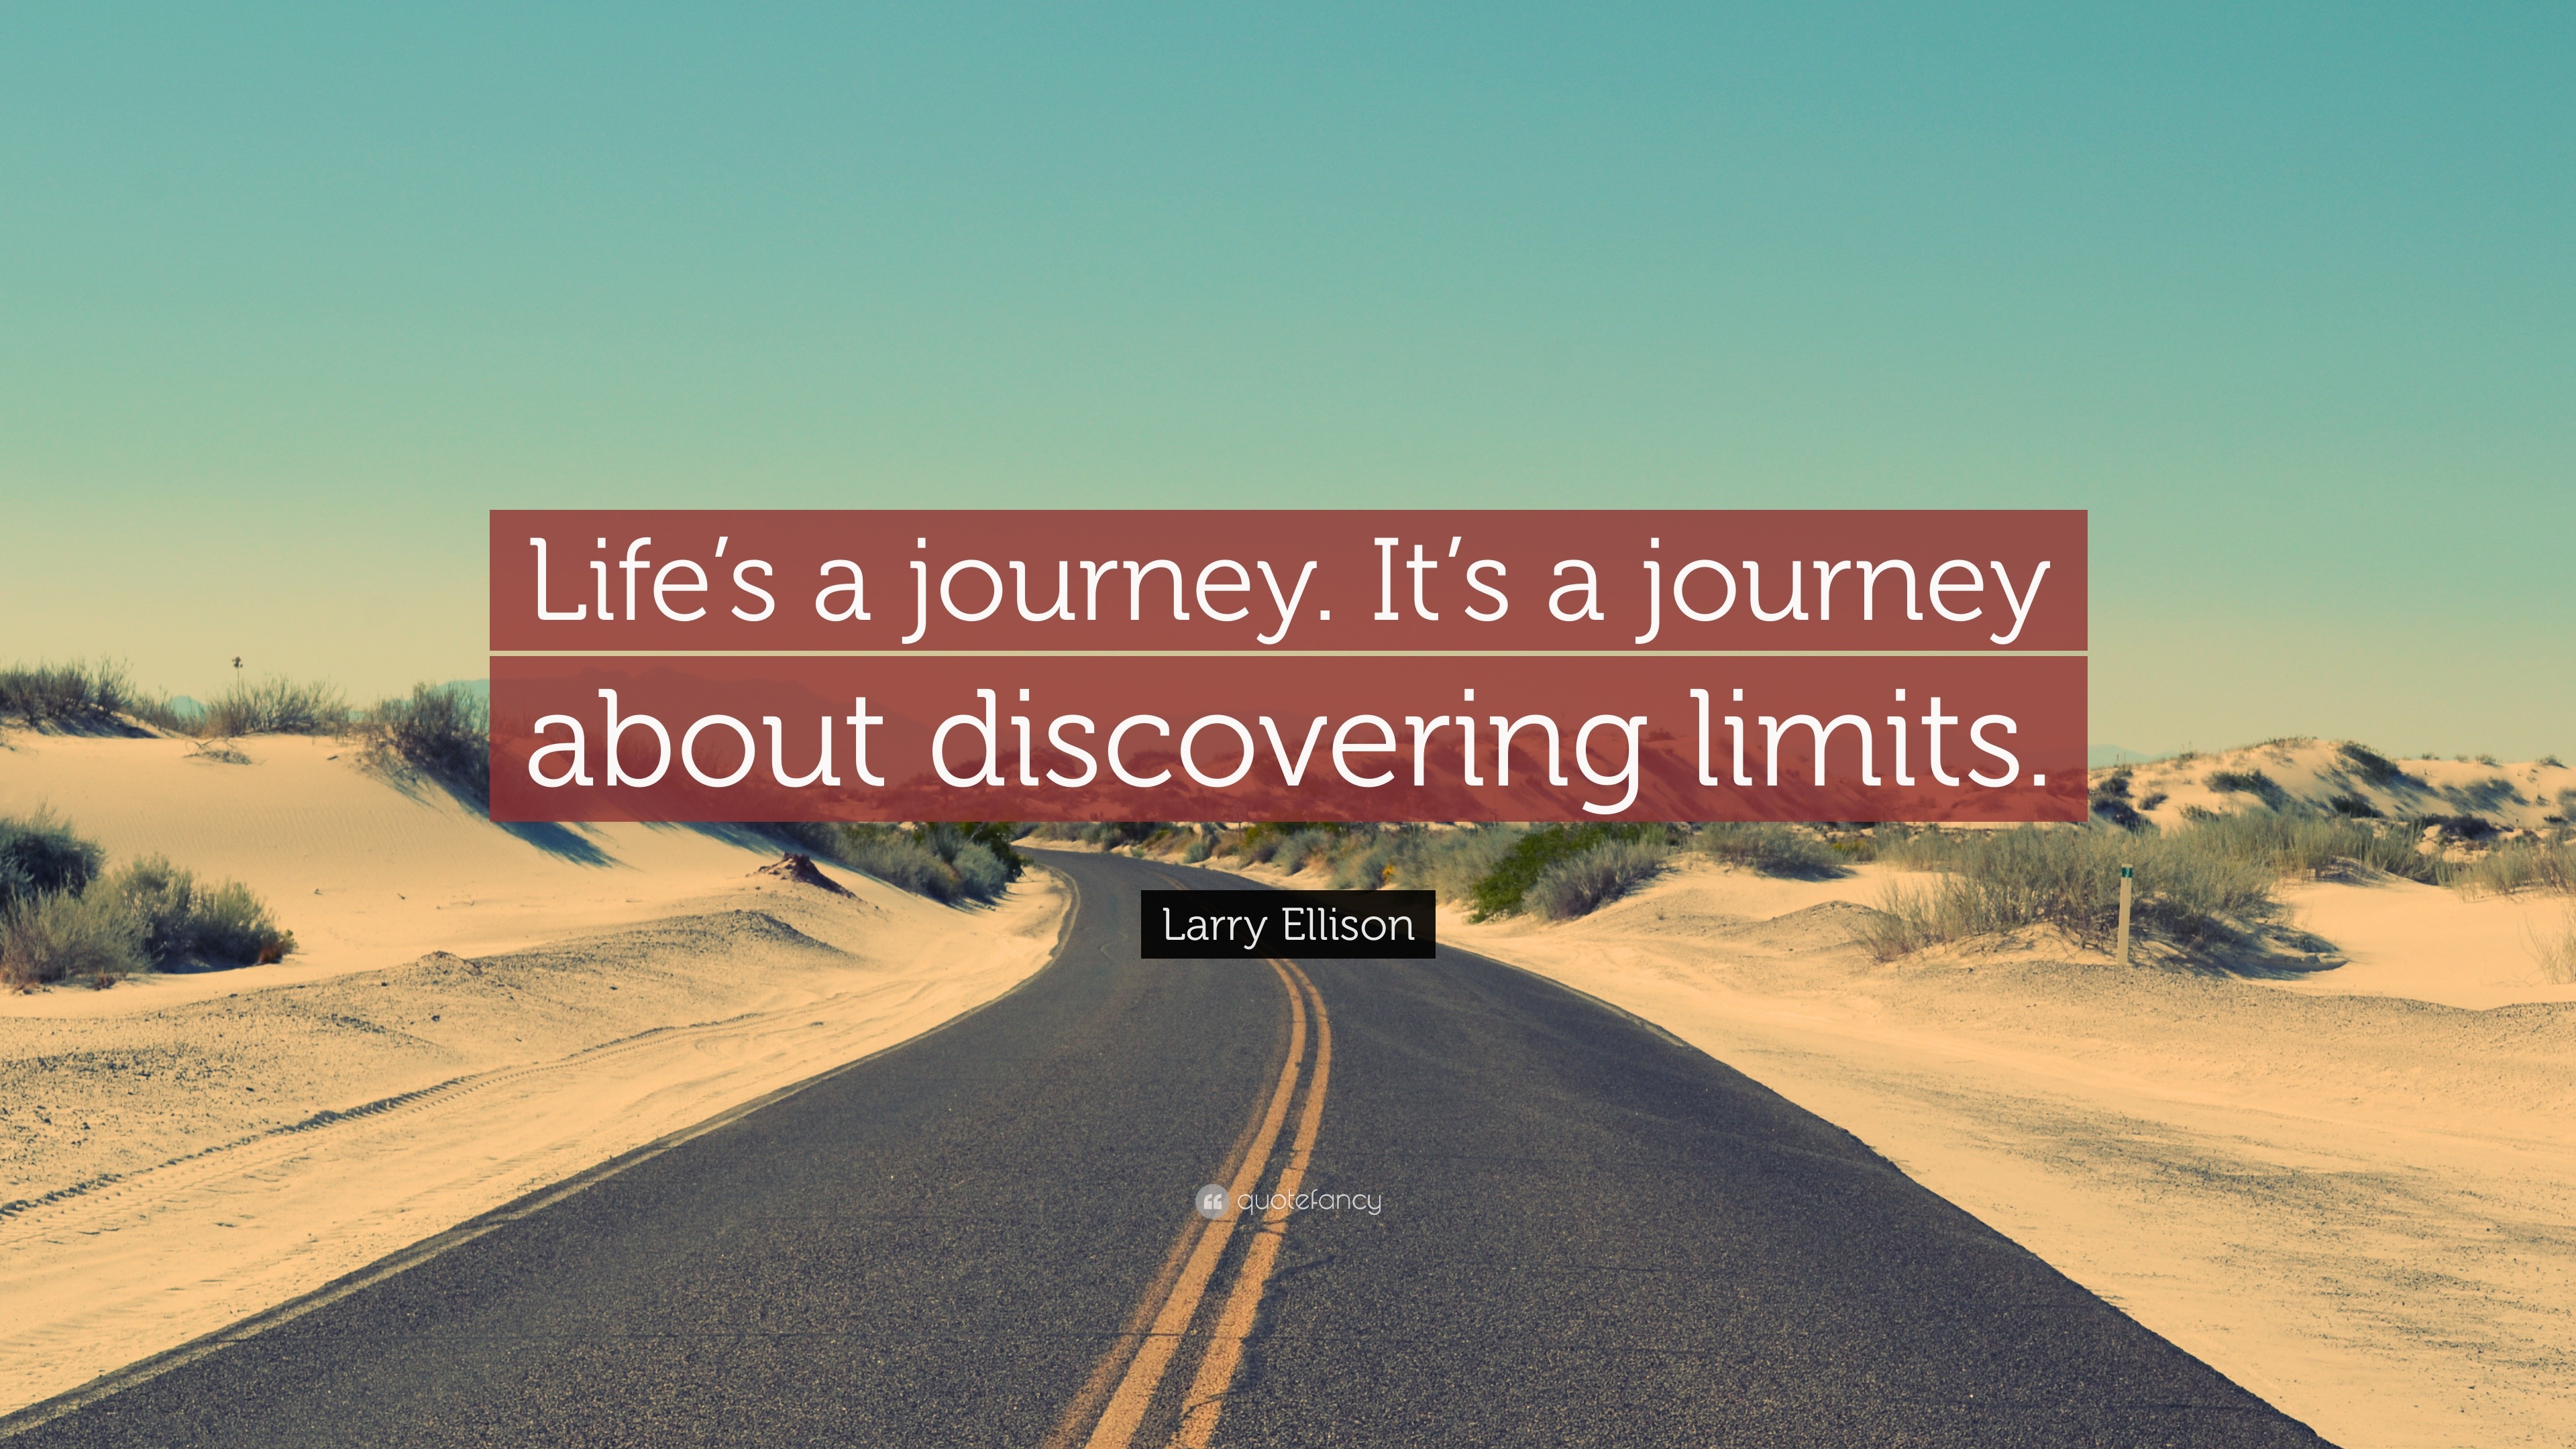 Larry Ellison Quote “Life s a journey It s a journey about discovering limits